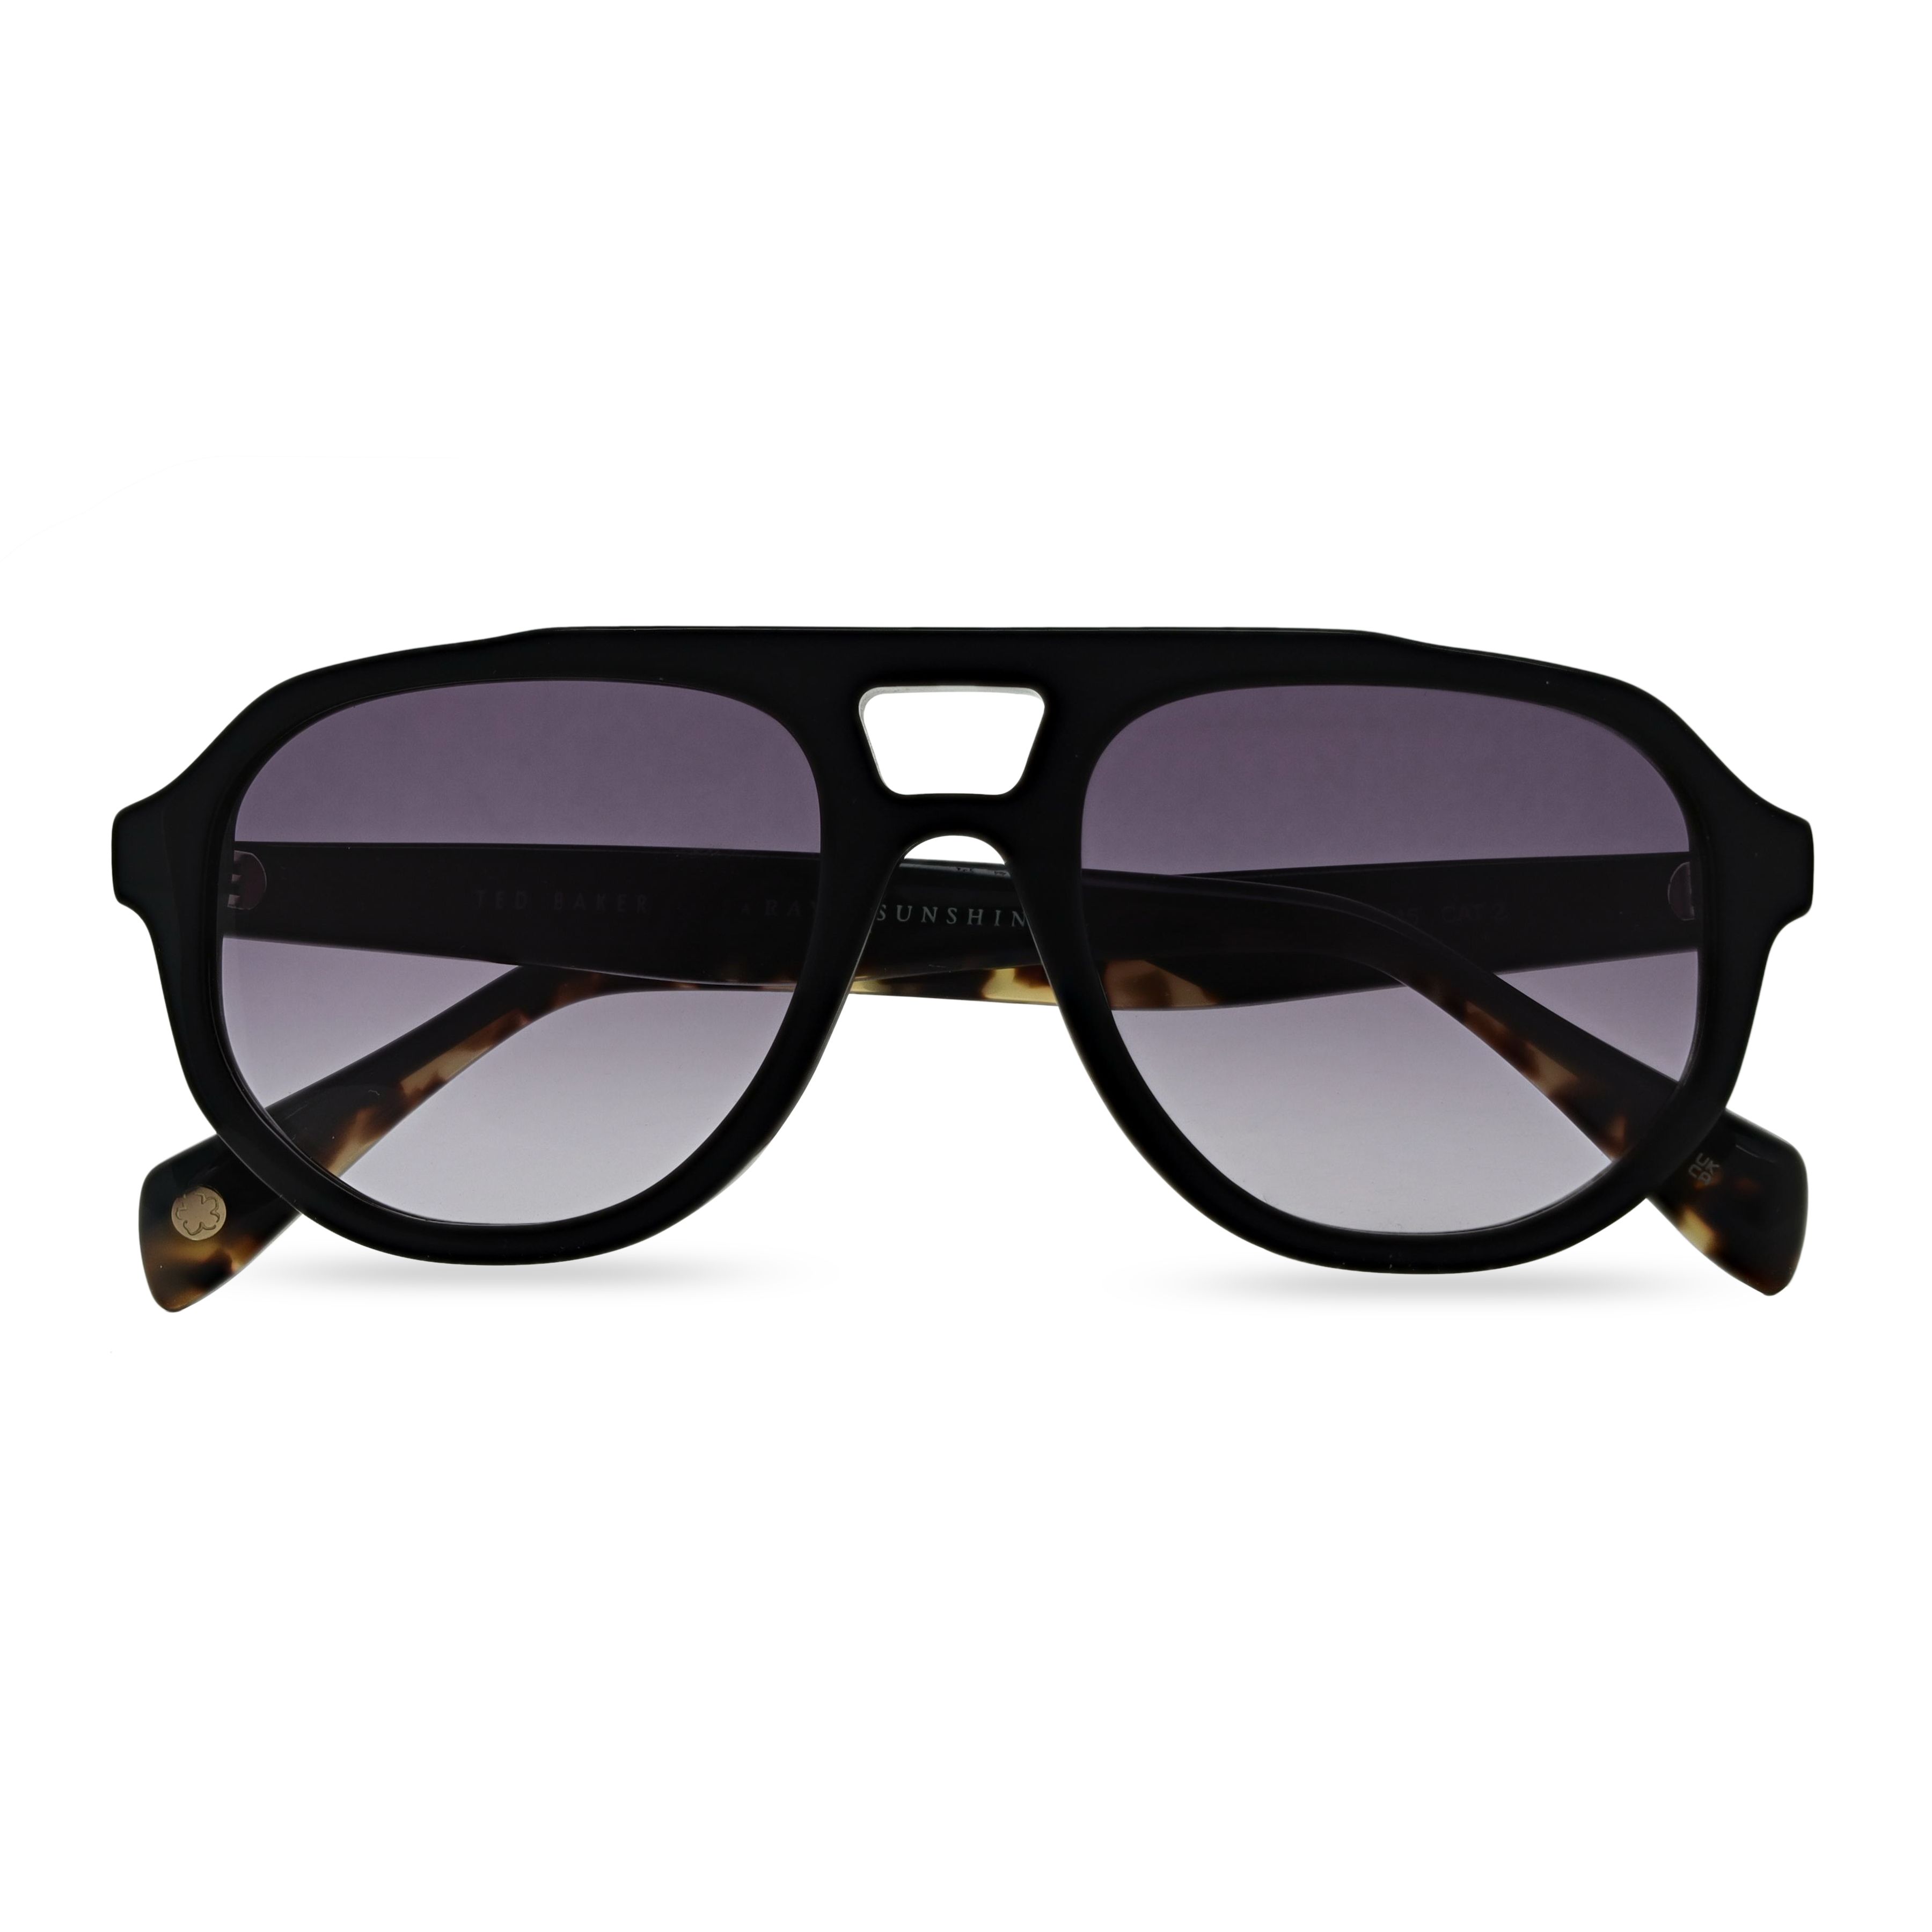 1692 Pilot Sunglasses 001 - size 53